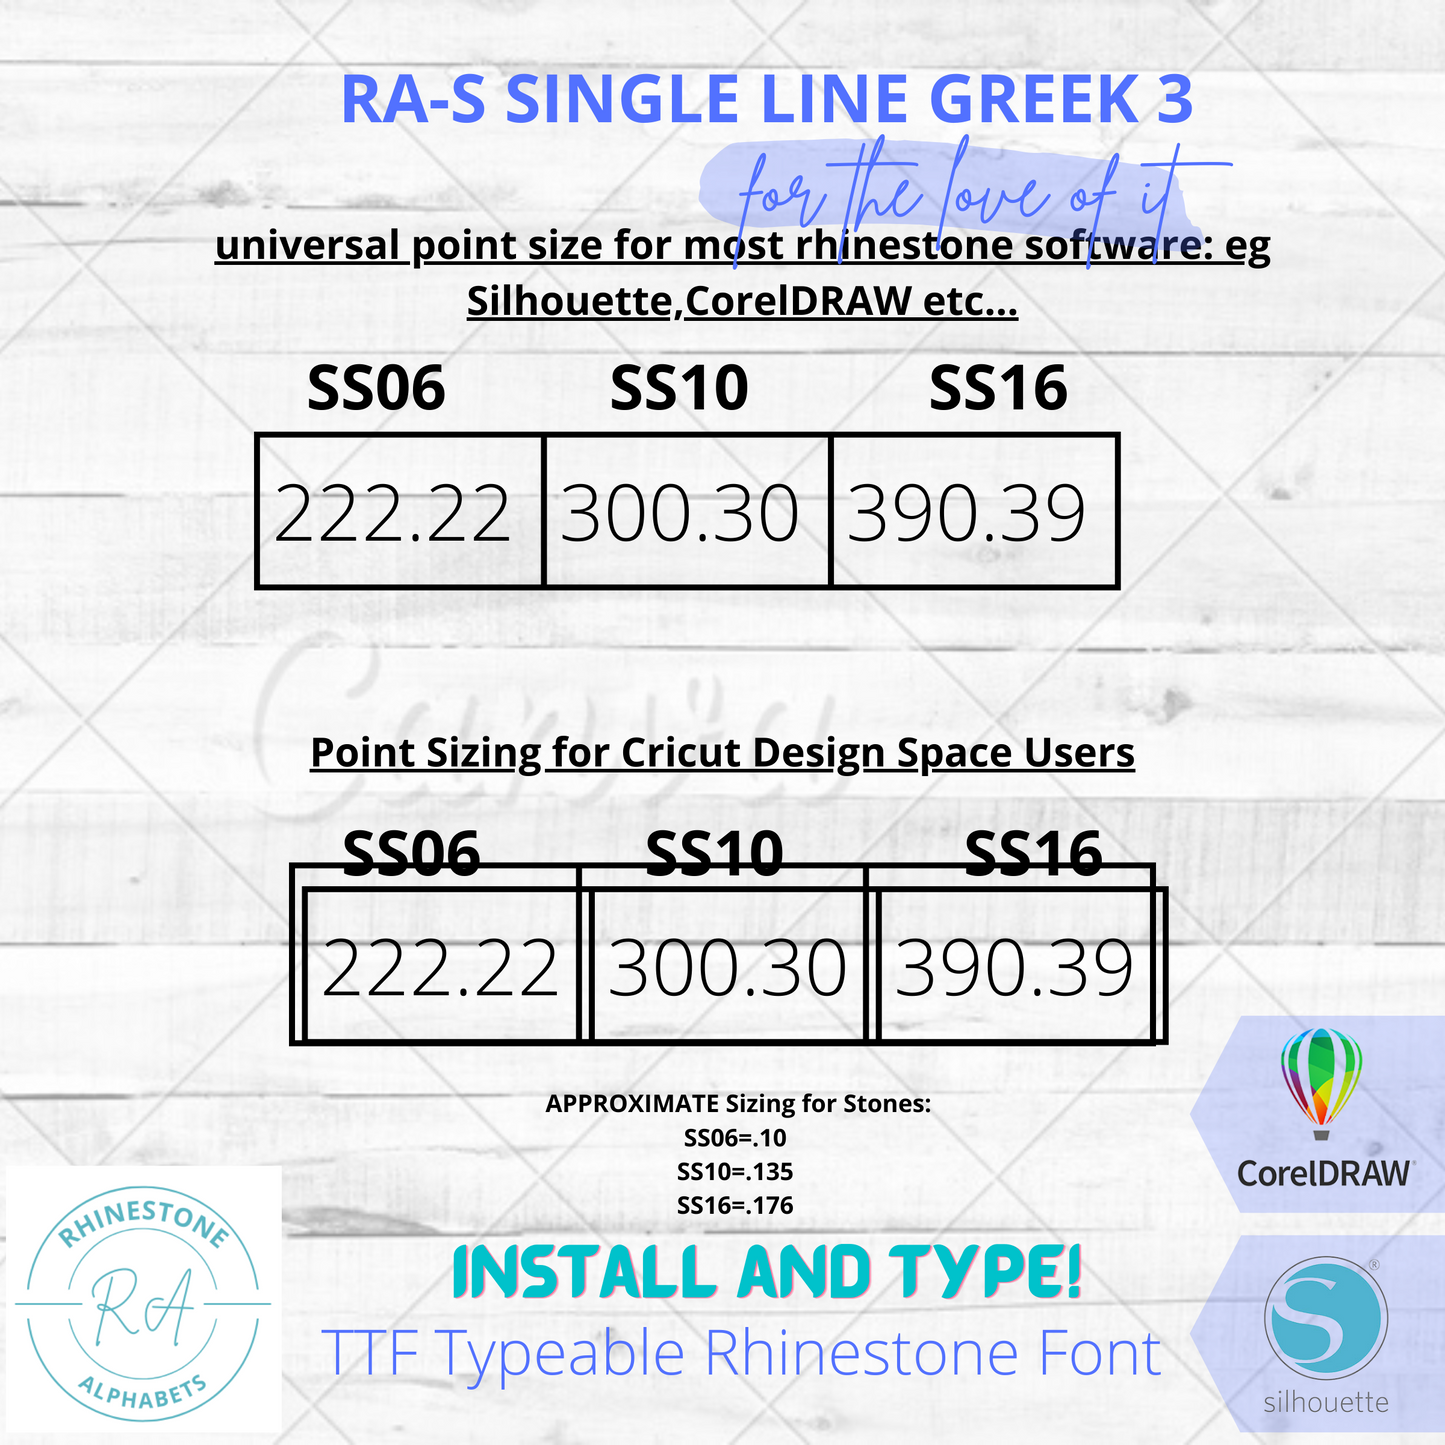 RA-S Singleline Greek 3